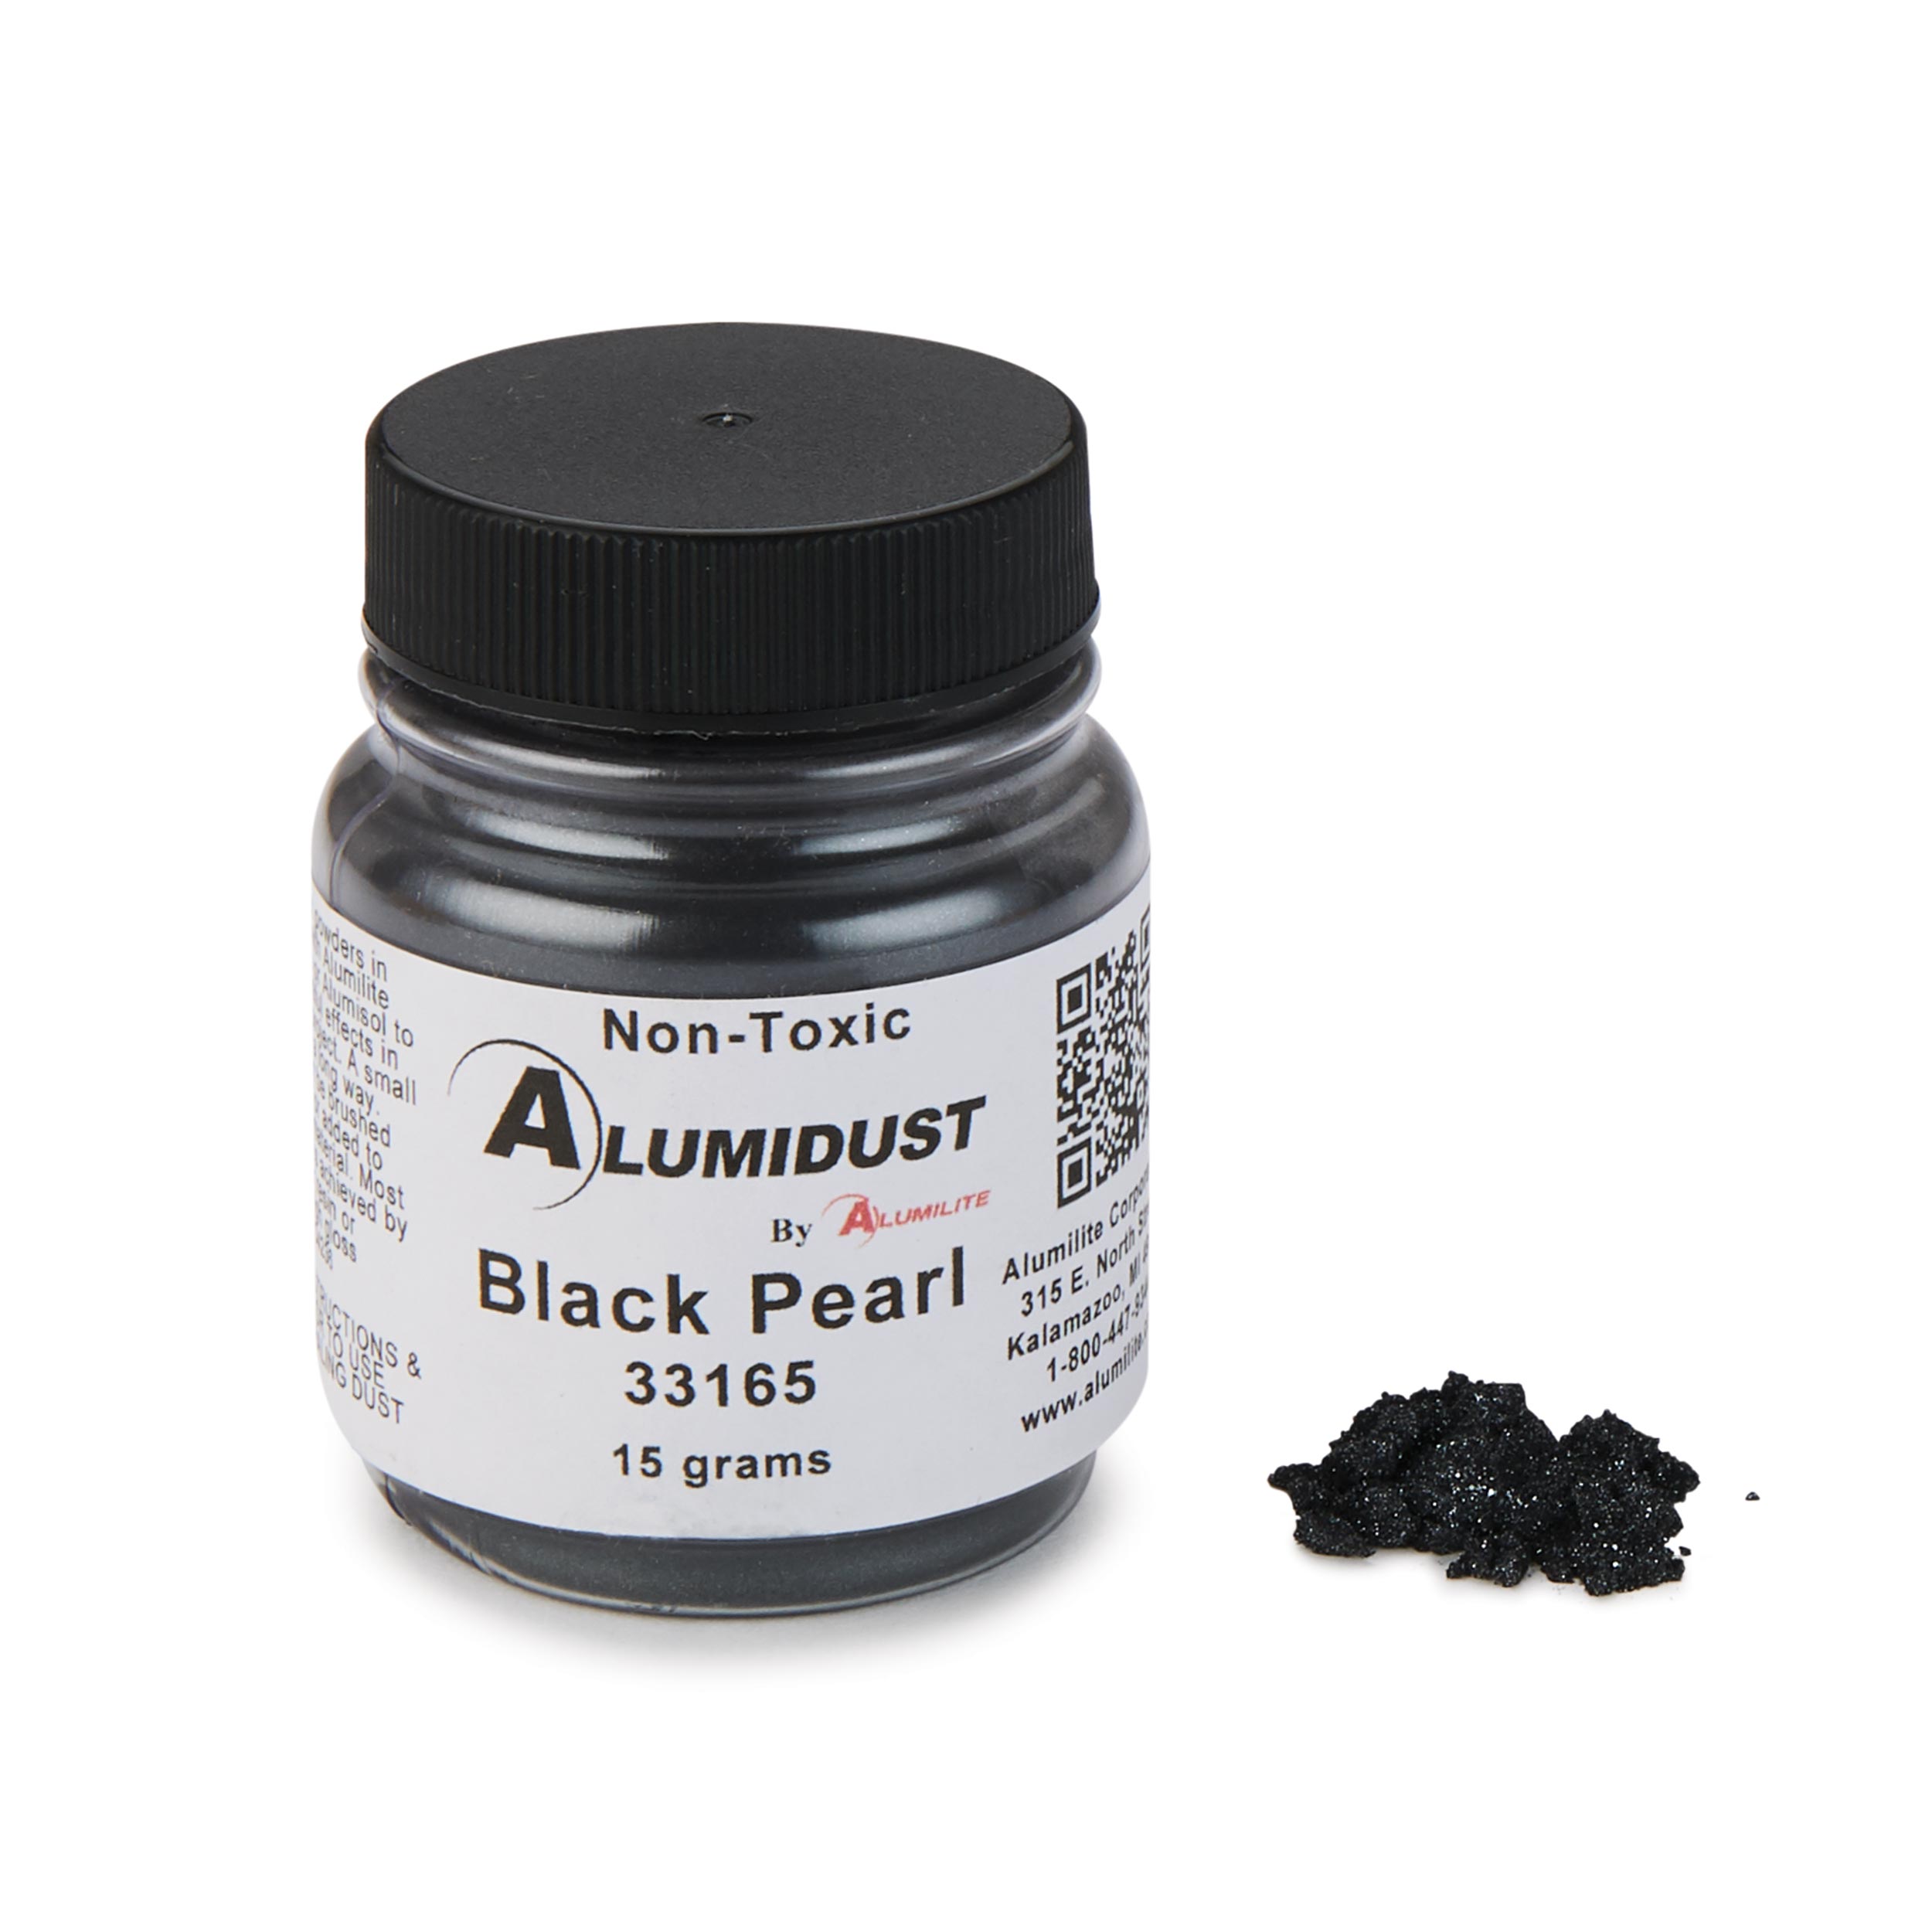 Alumidust Black Pearl 15gram